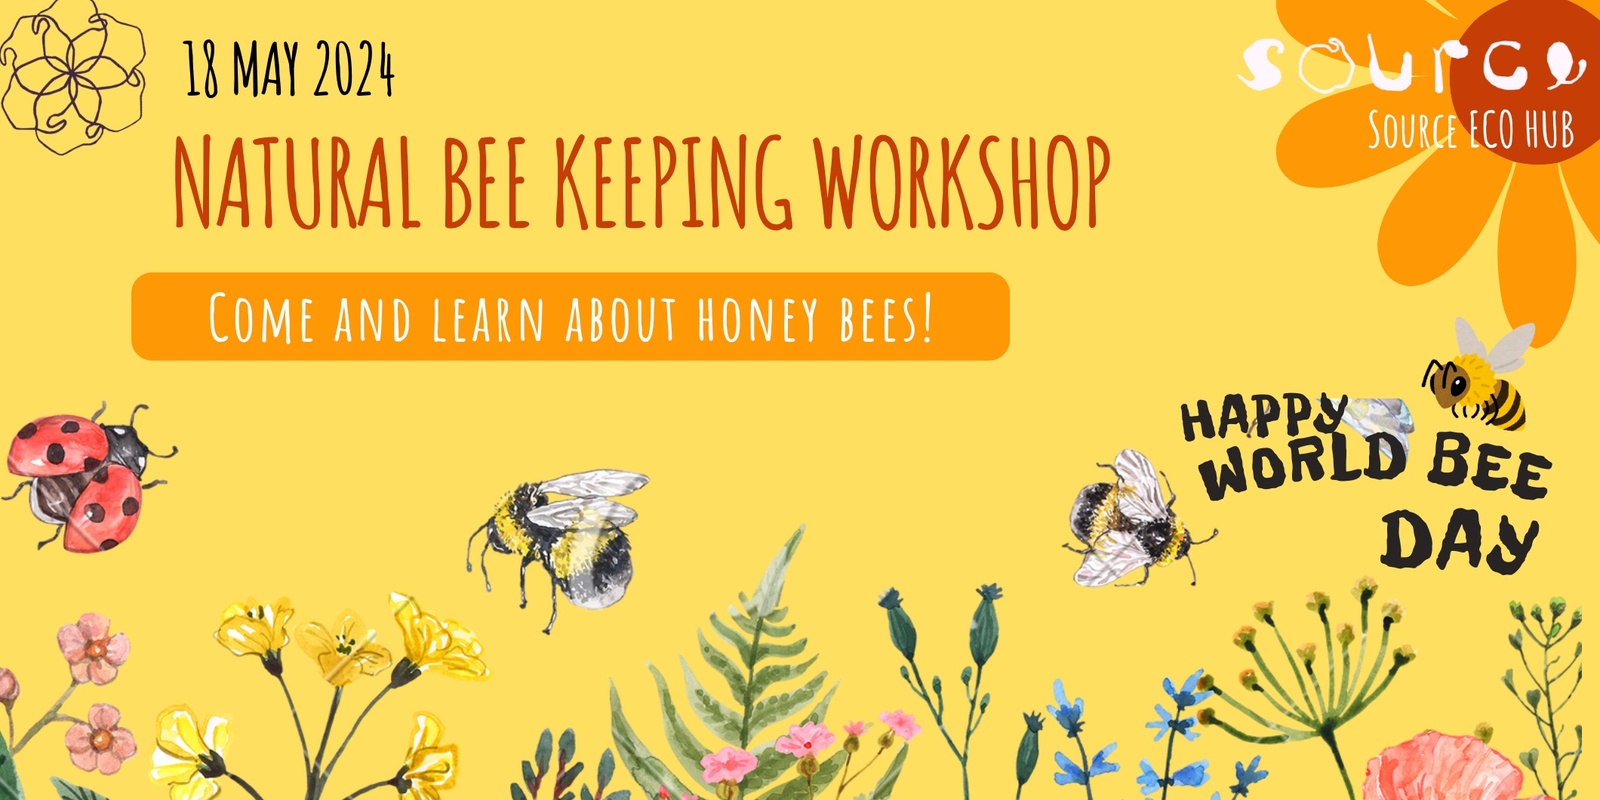 Banner image for Natural Bee Keeping Workshop at Source Eco Hub